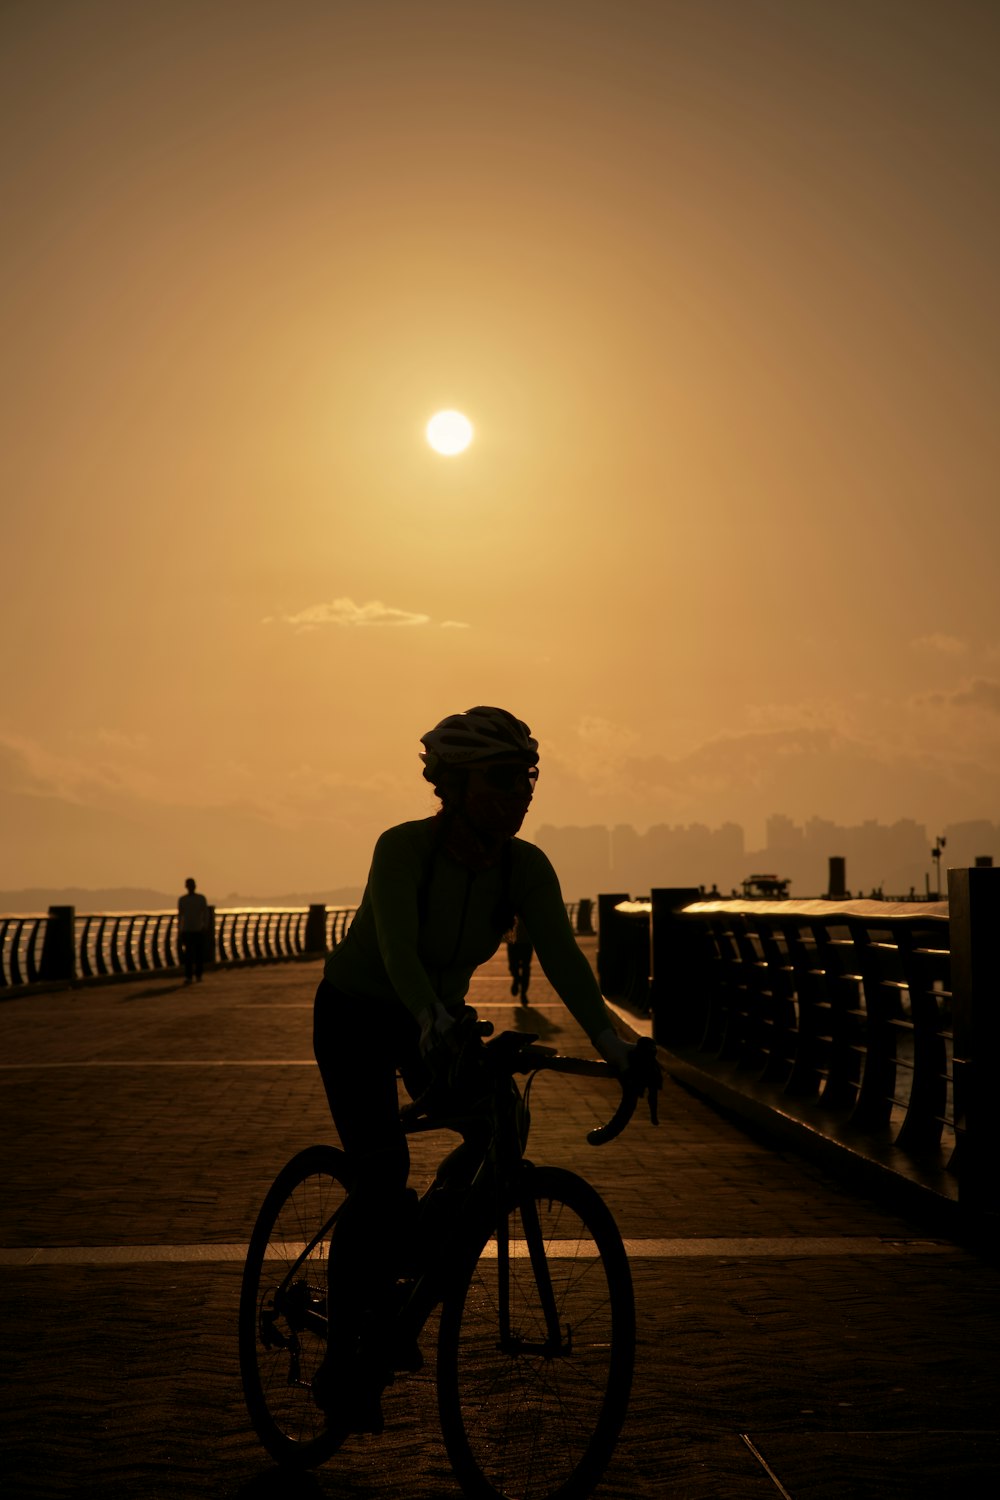 a man riding a bike across a bridge at sunset